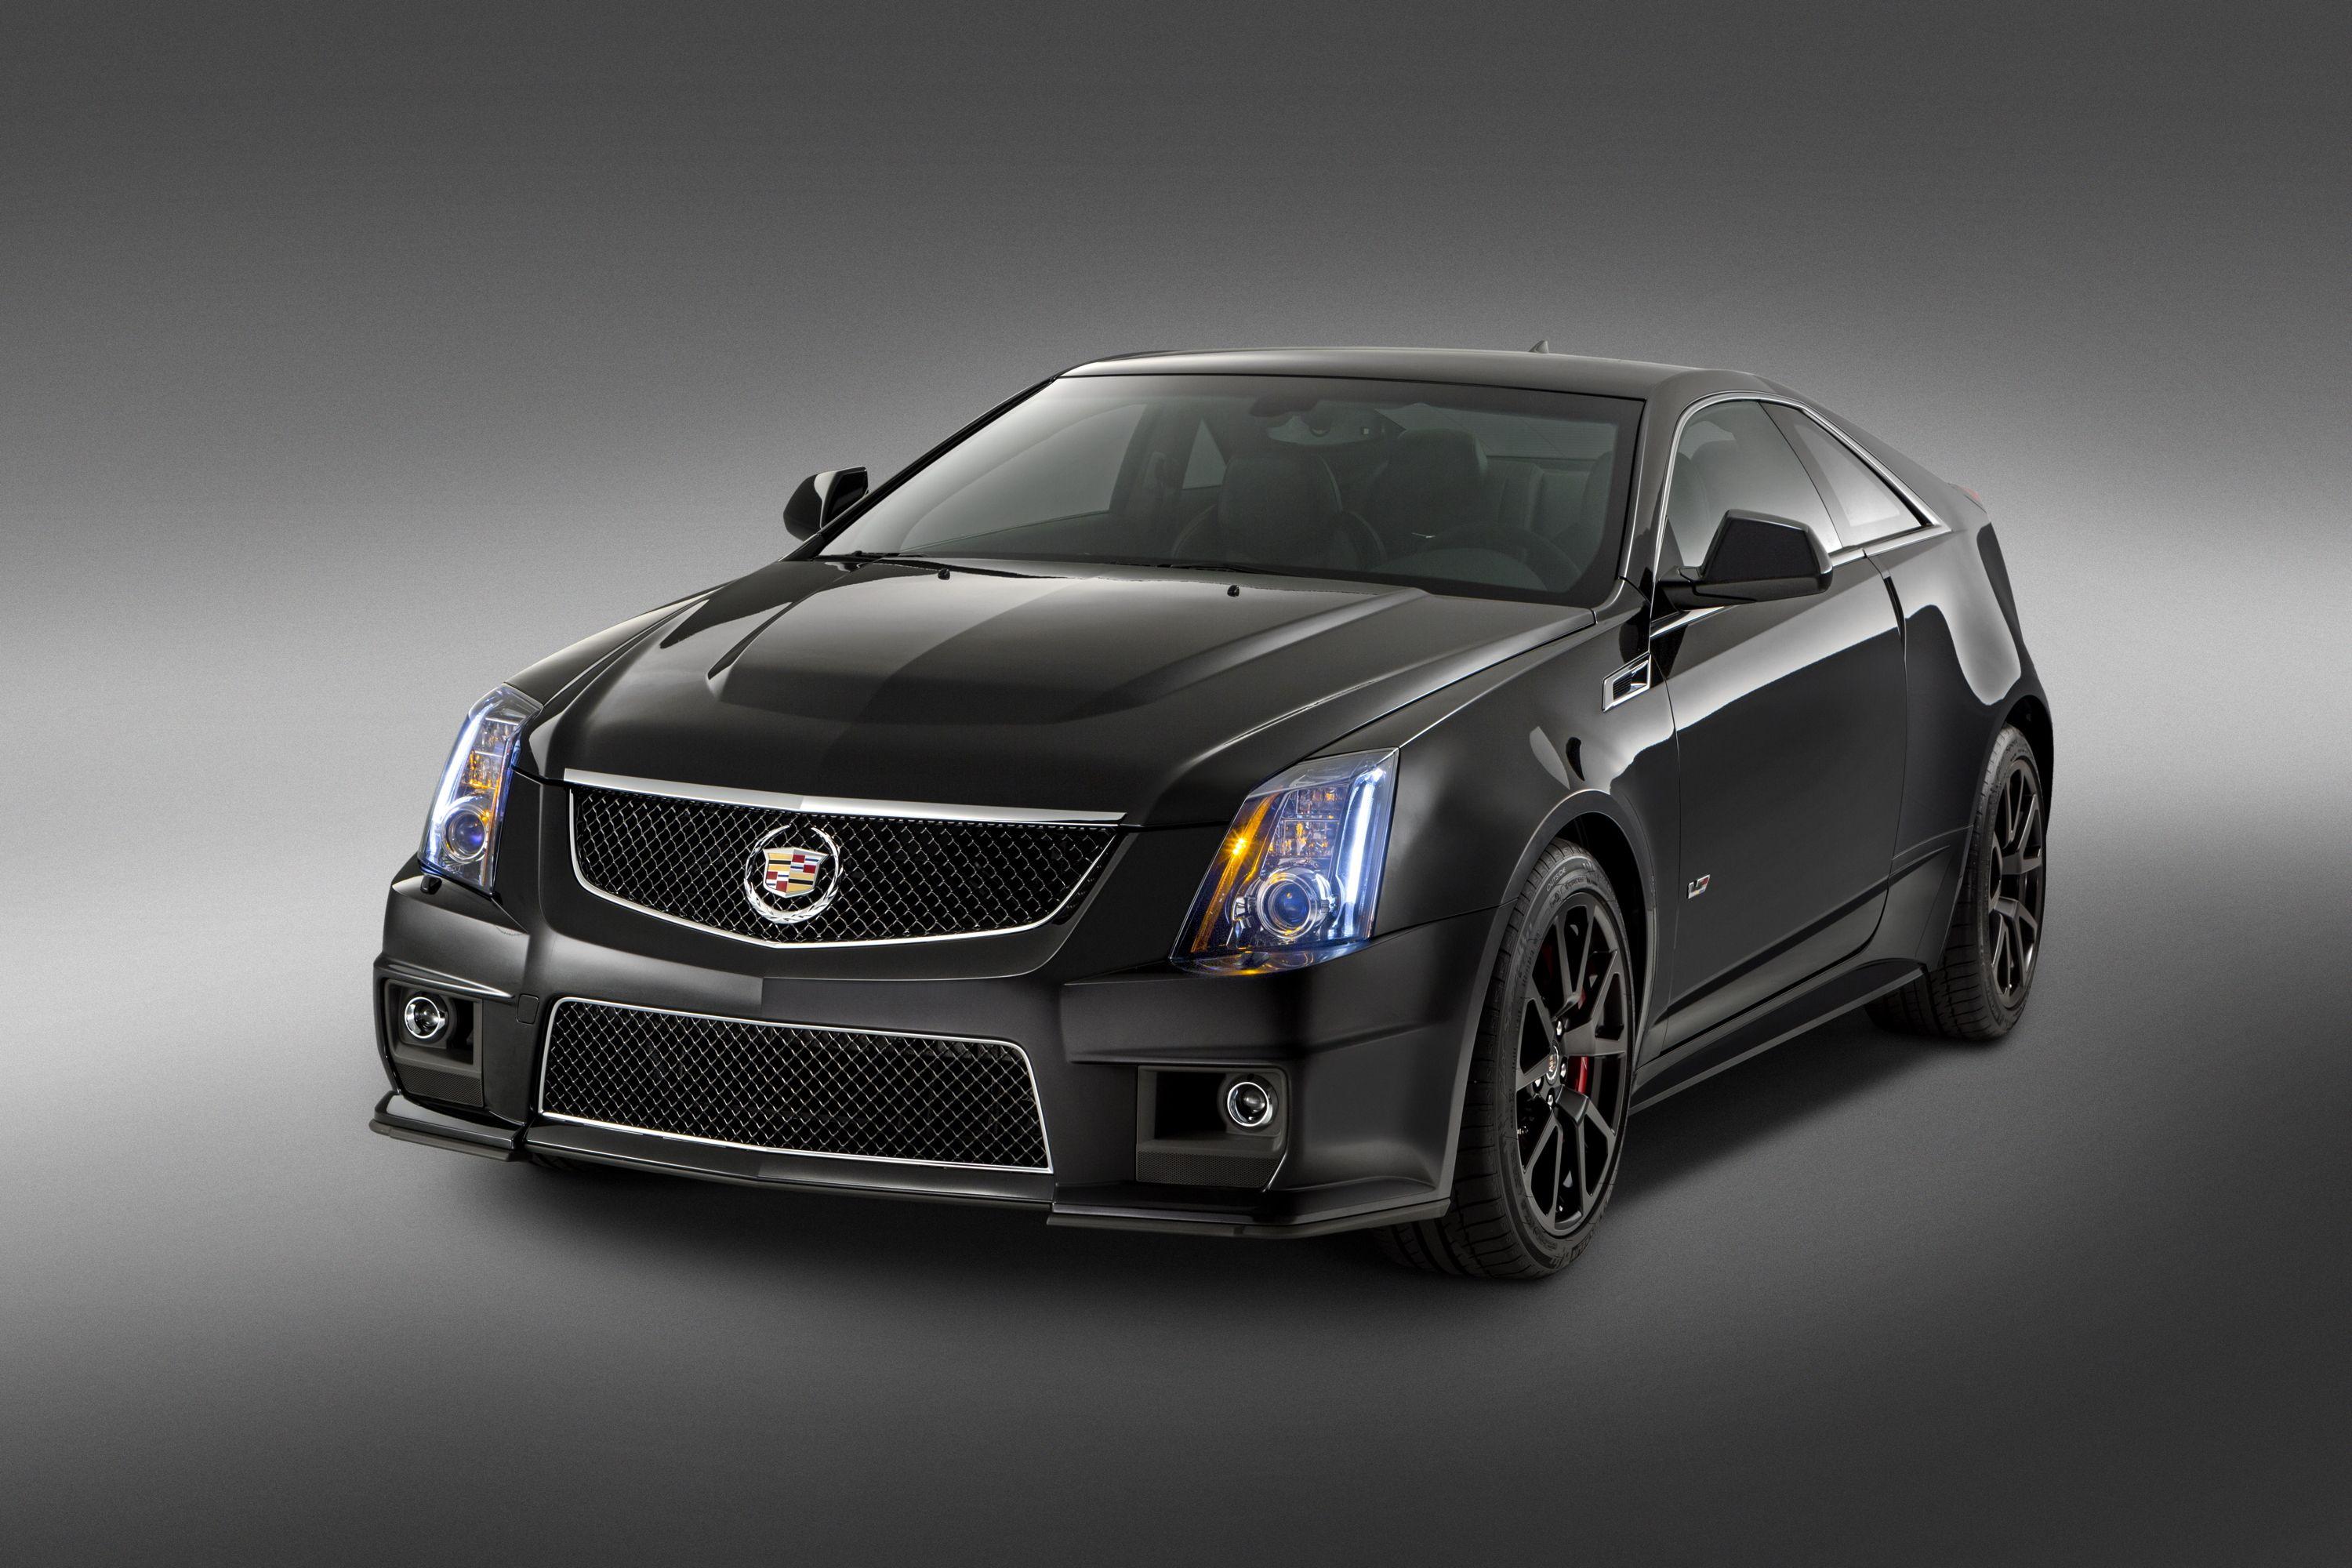 Cadillac V Series Logo - Cadillac Celebrates V-Series with 2015 CTS-V Coupe